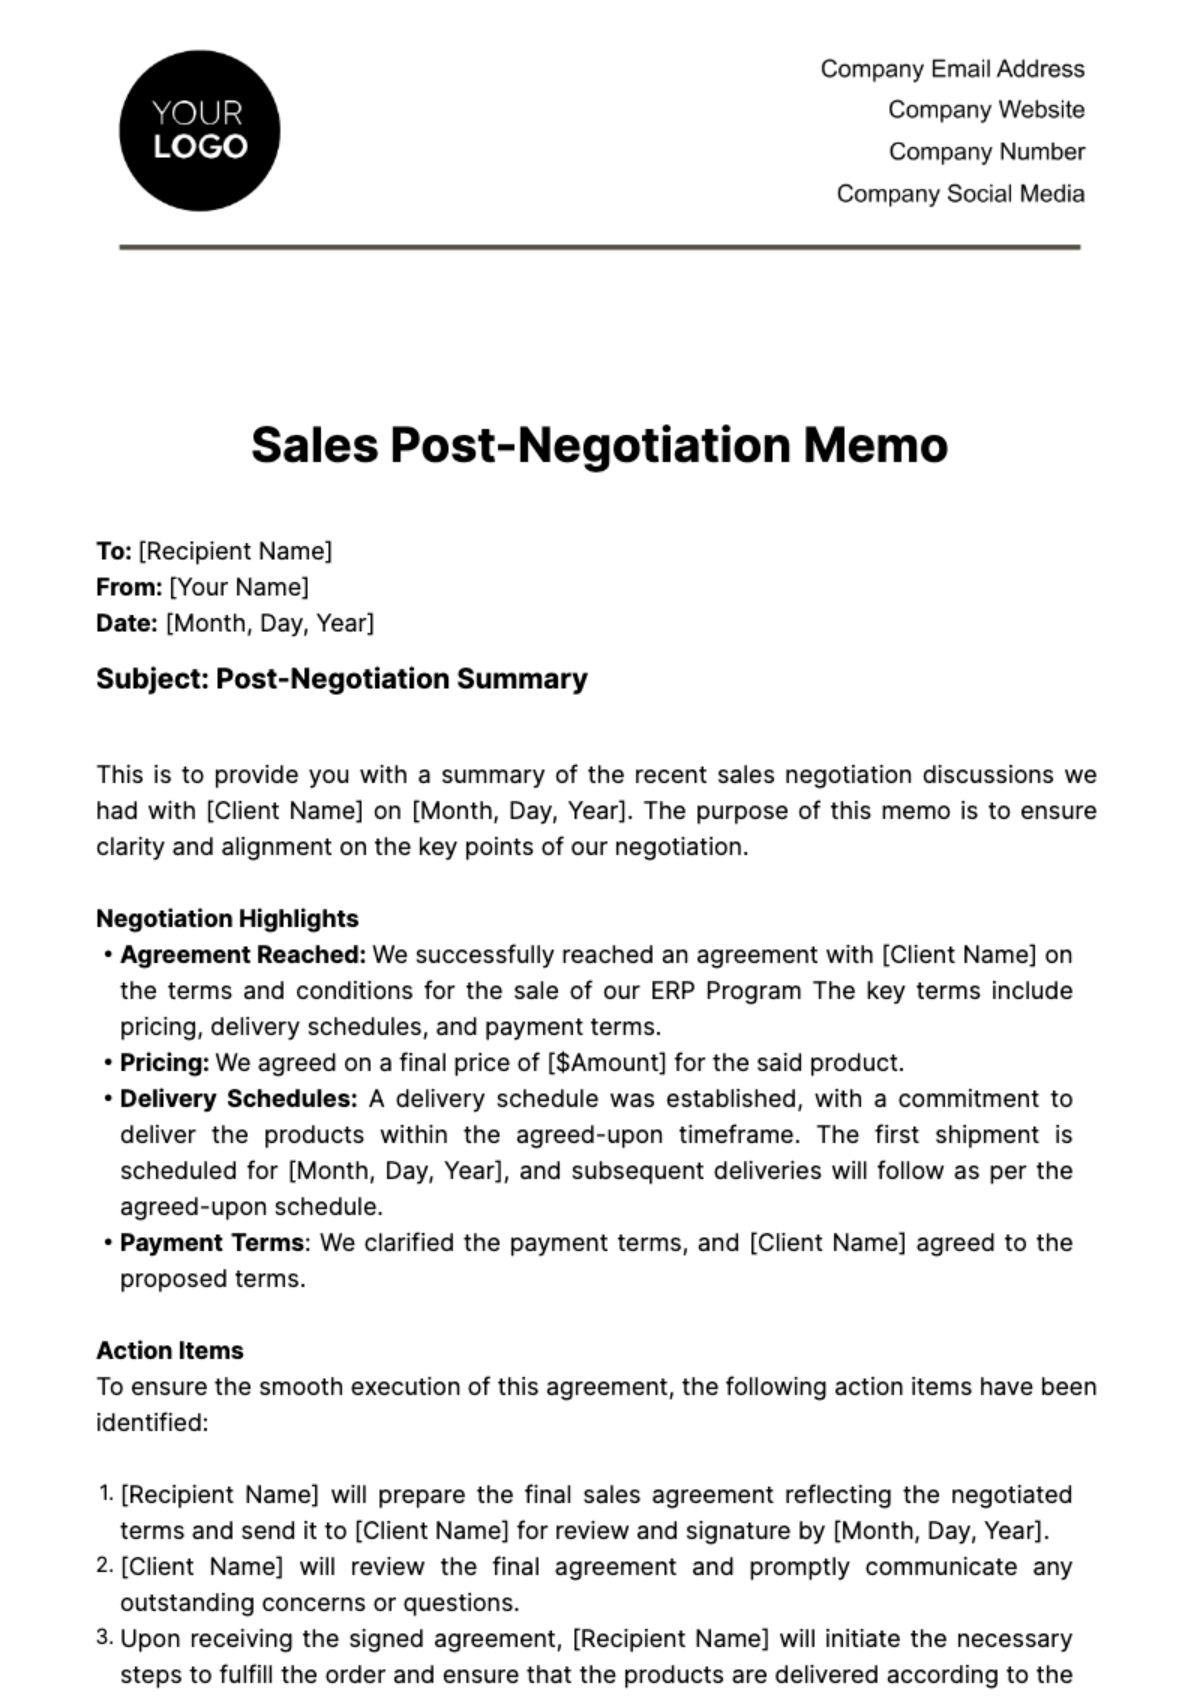 Sales Post-Negotiation Memo Template